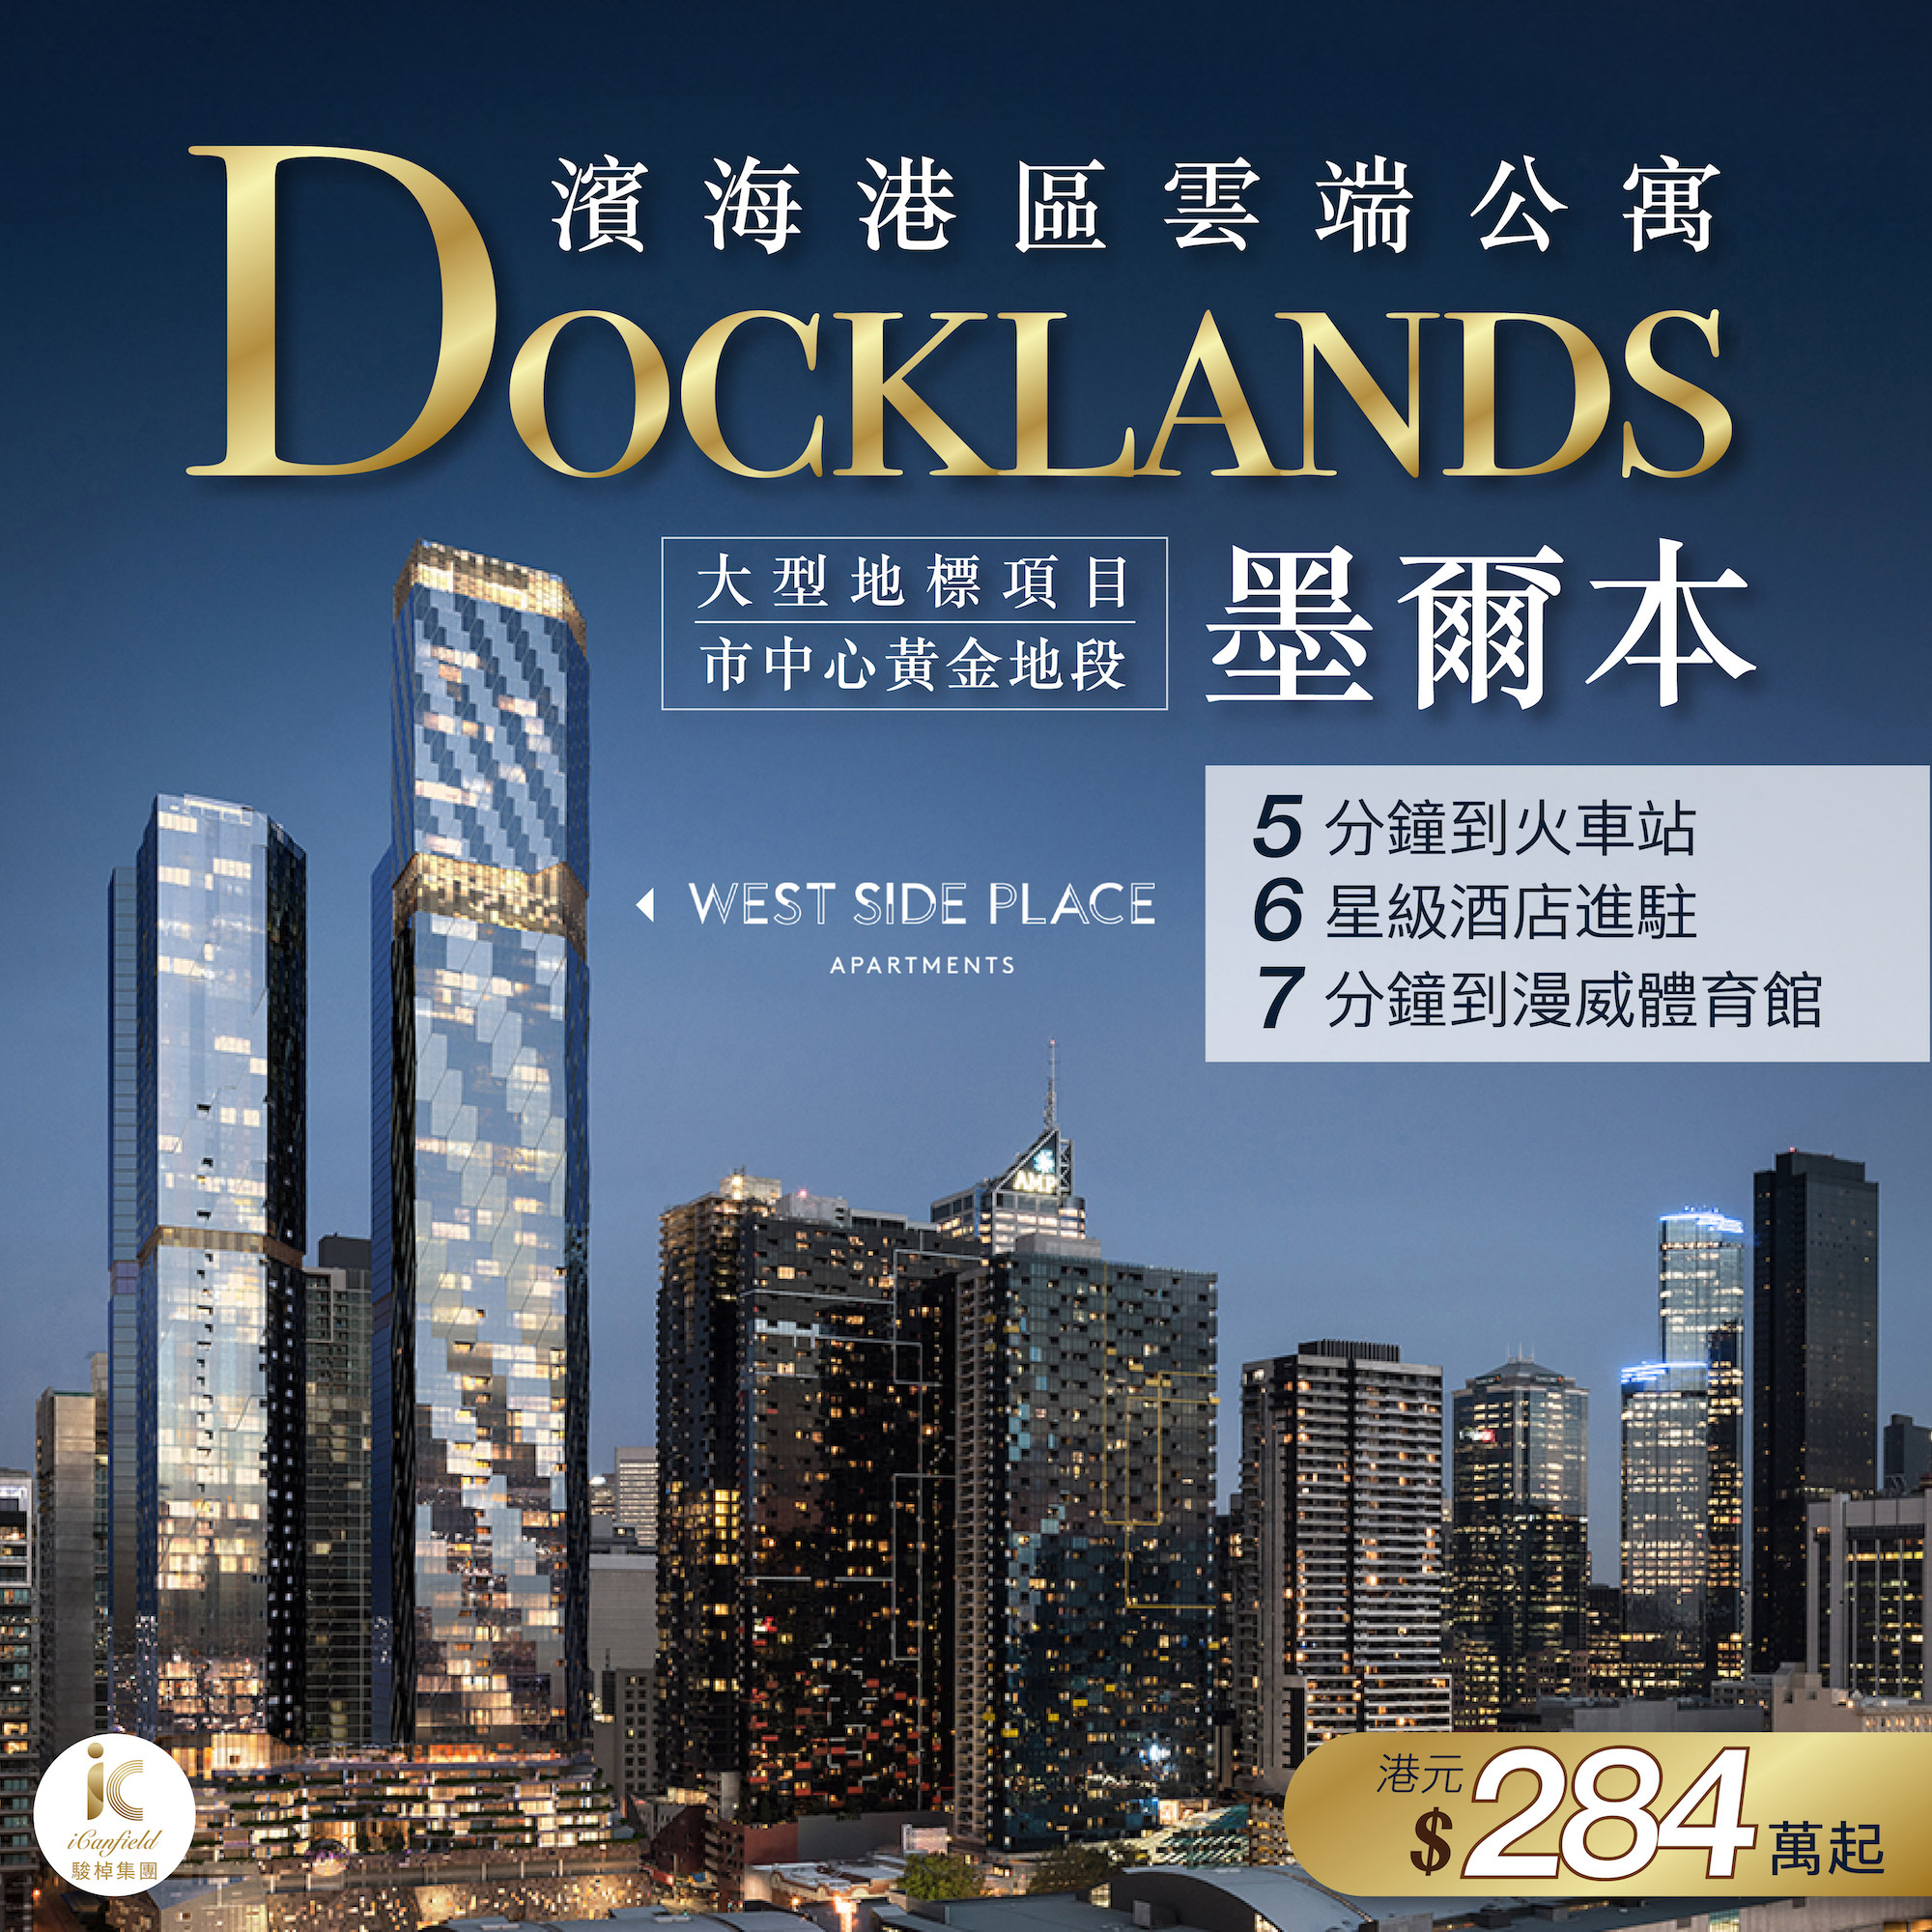 West Side Place - 坐落澳洲墨爾本市中心黃金地段CBD Docklands大型地標項目， 🔝六星級酒店進駐 Ritz-Carlton 及 Dorsett Hotel，屬區內知名豪華公寓👍。